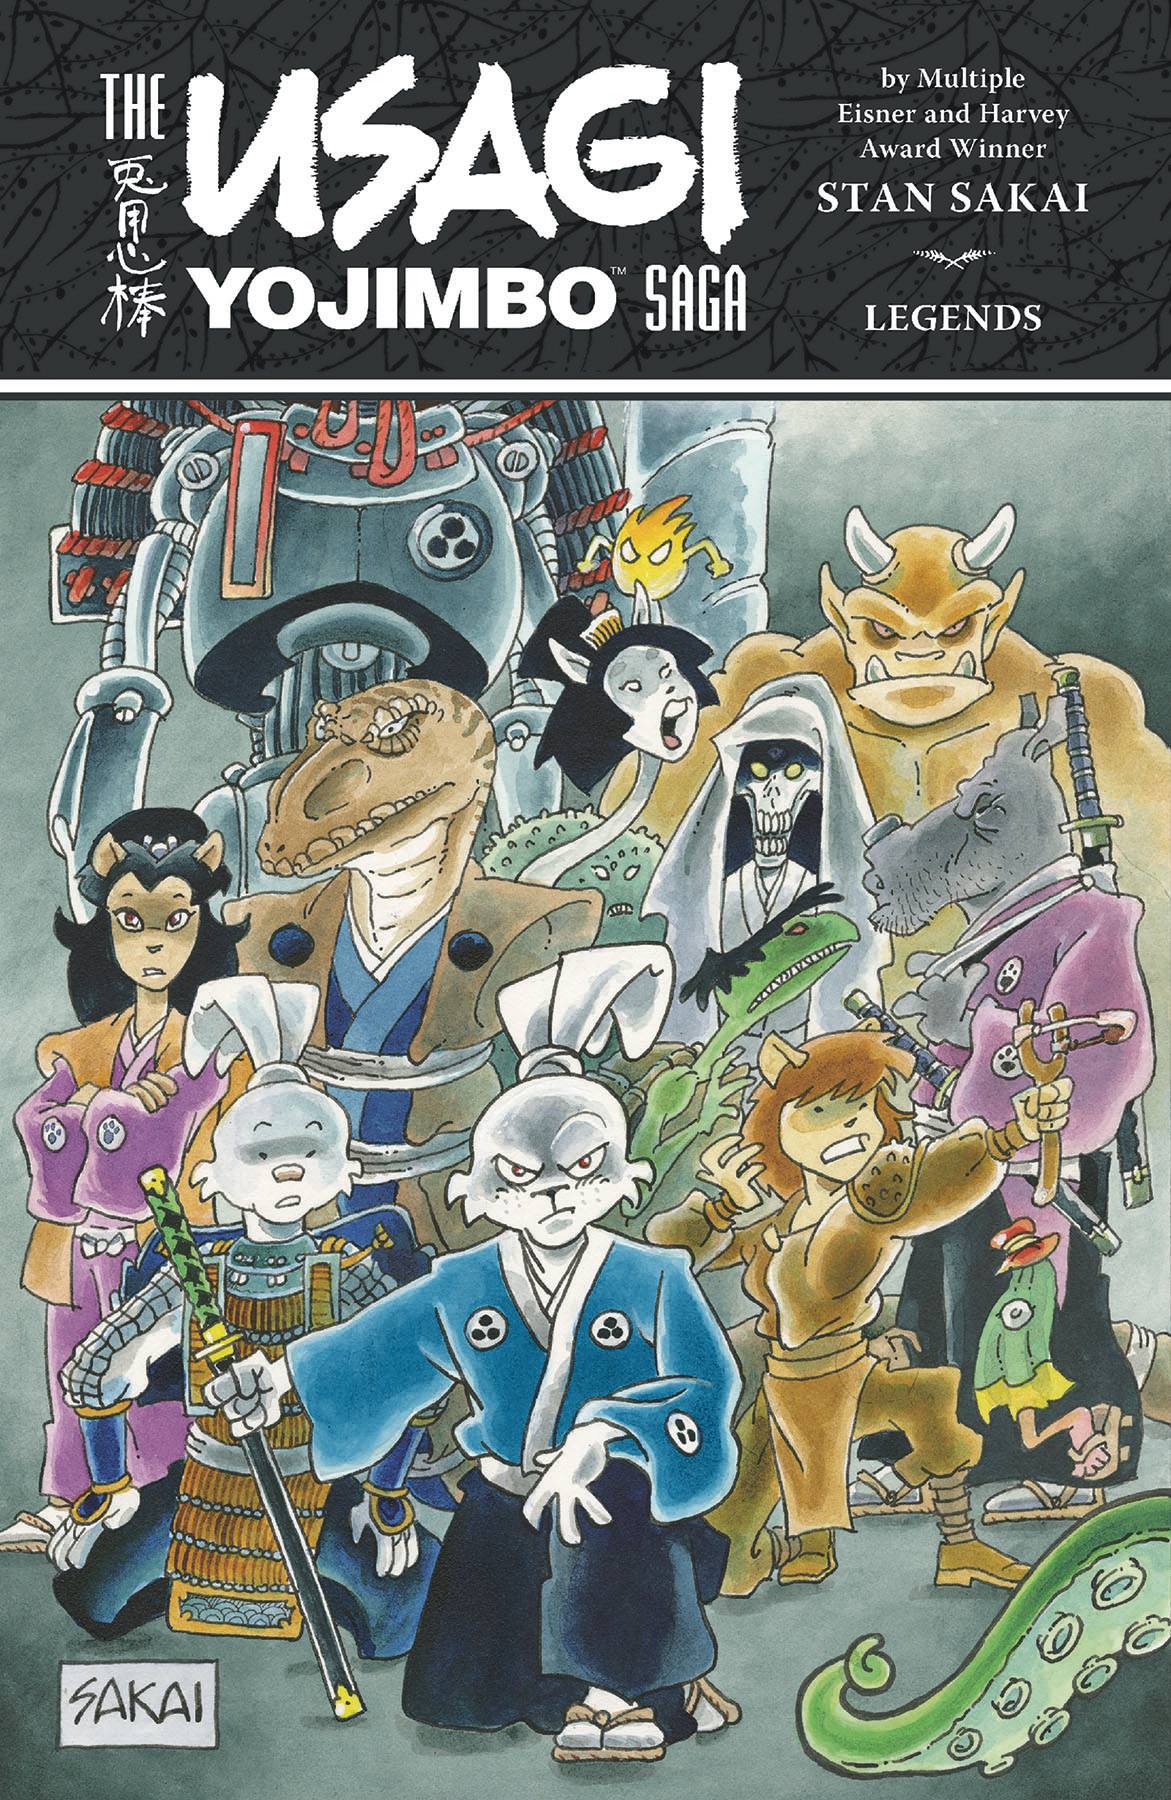 Usagi Yojimbo Saga Legends Graphic Novel